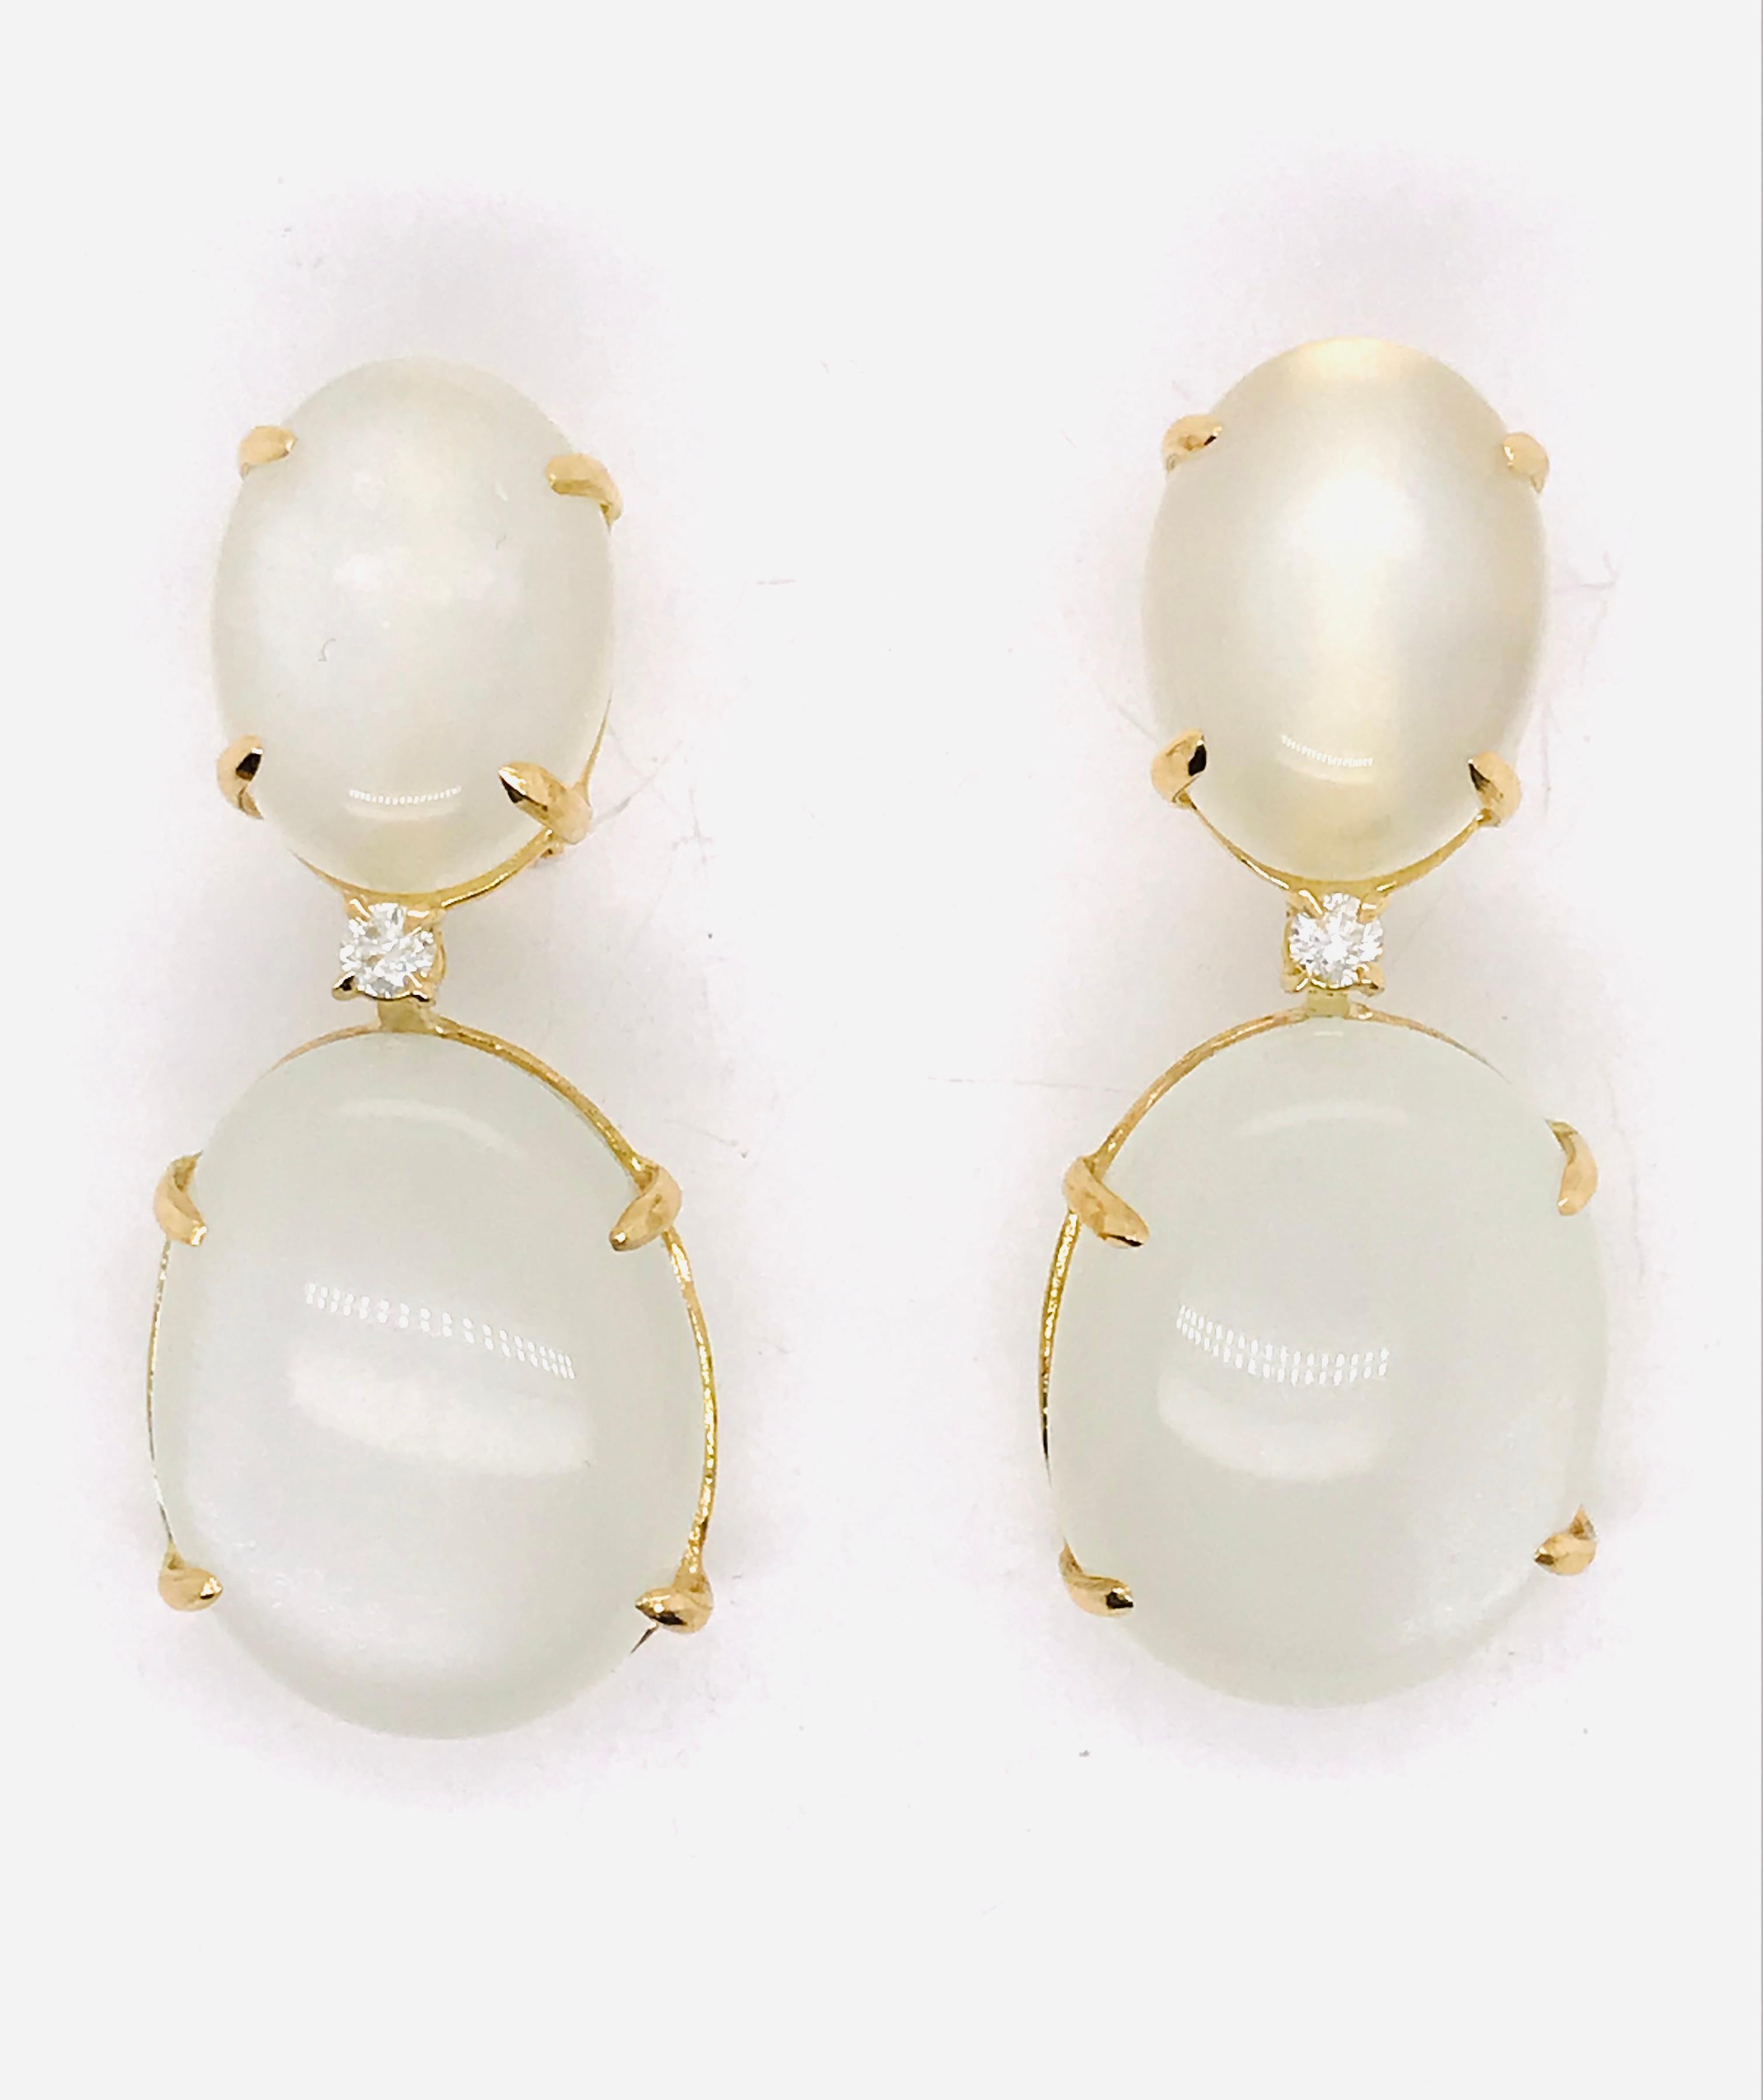 Brilliant Cut Moonstone and Diamonds on Yellow Gold 18 Karat Chandelier Earring